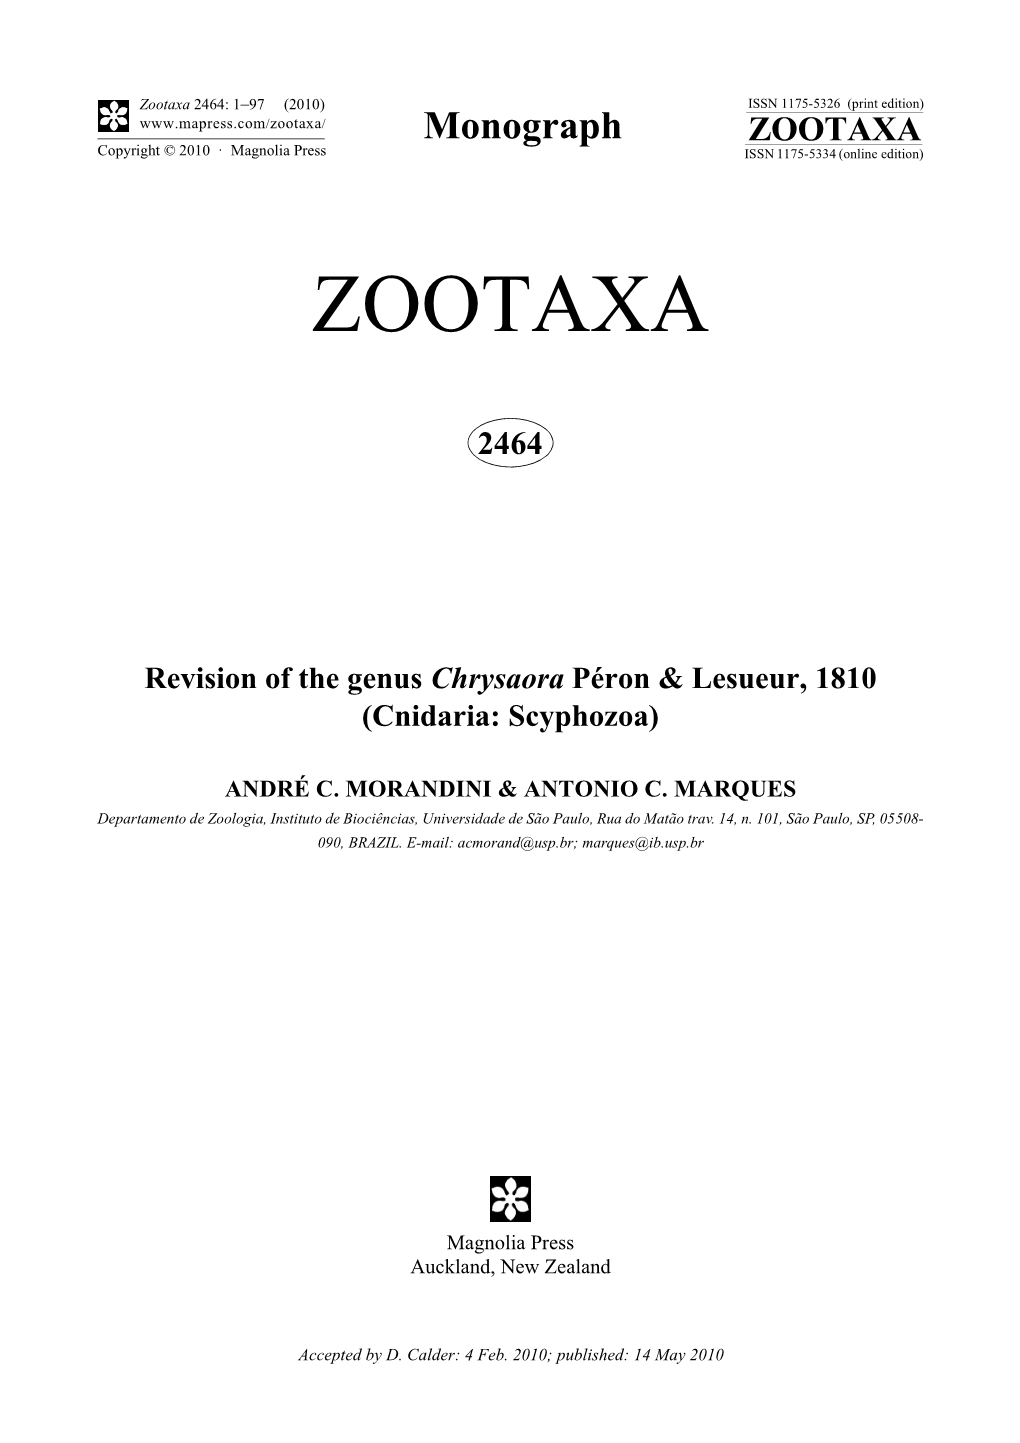 Zootaxa, Revision of the Genus Chrysaora Péron